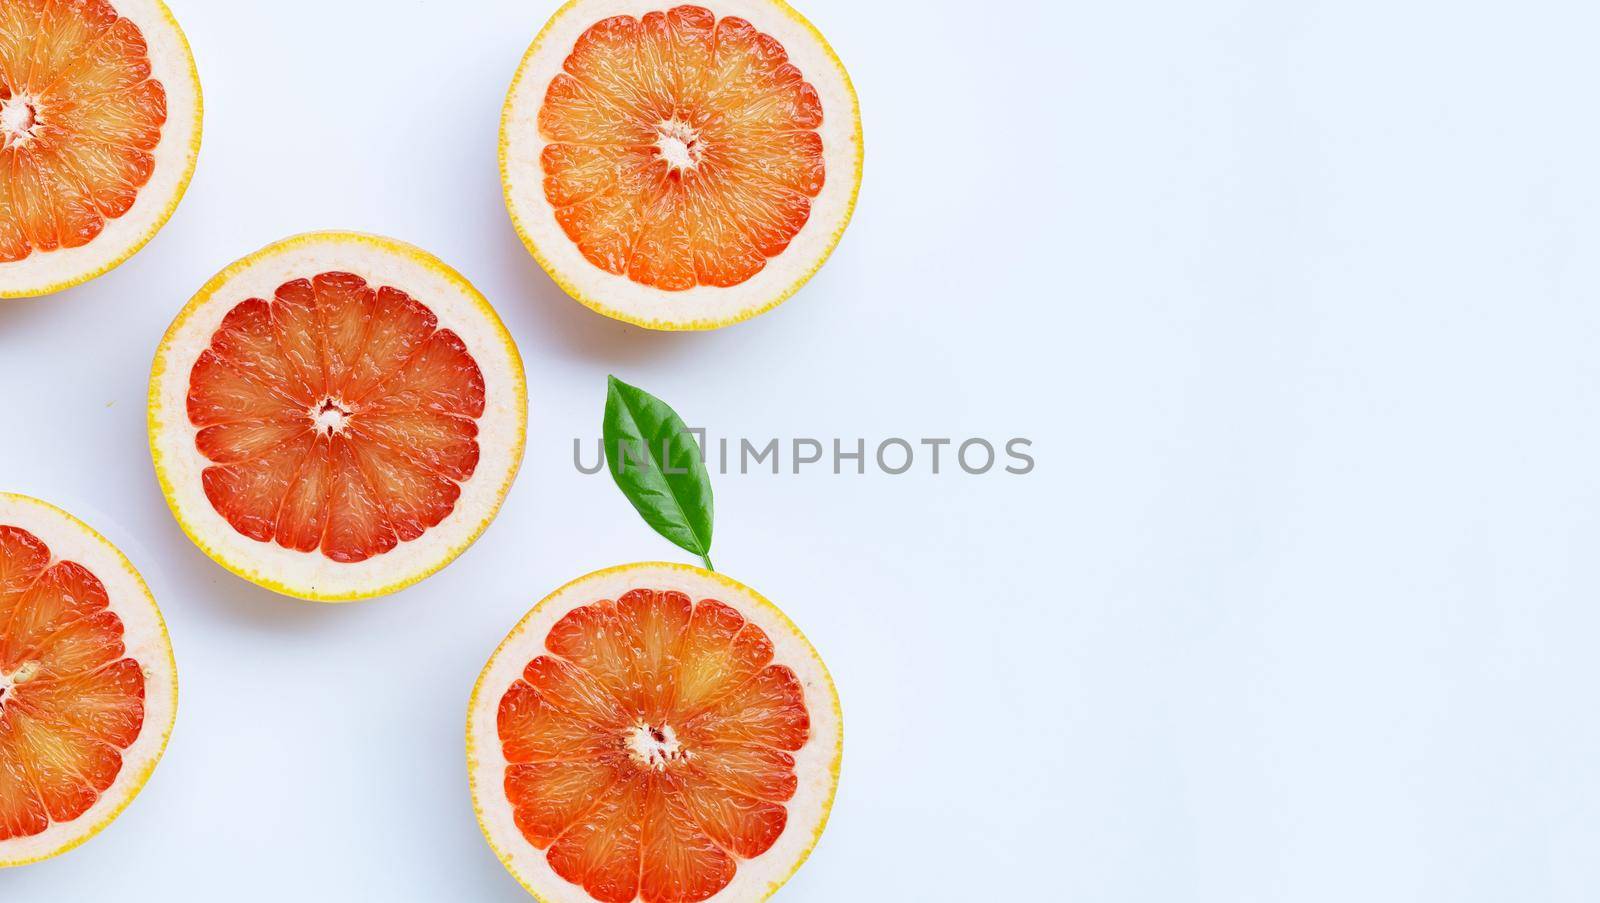 High vitamin C. Juicy grapefruit on white background.